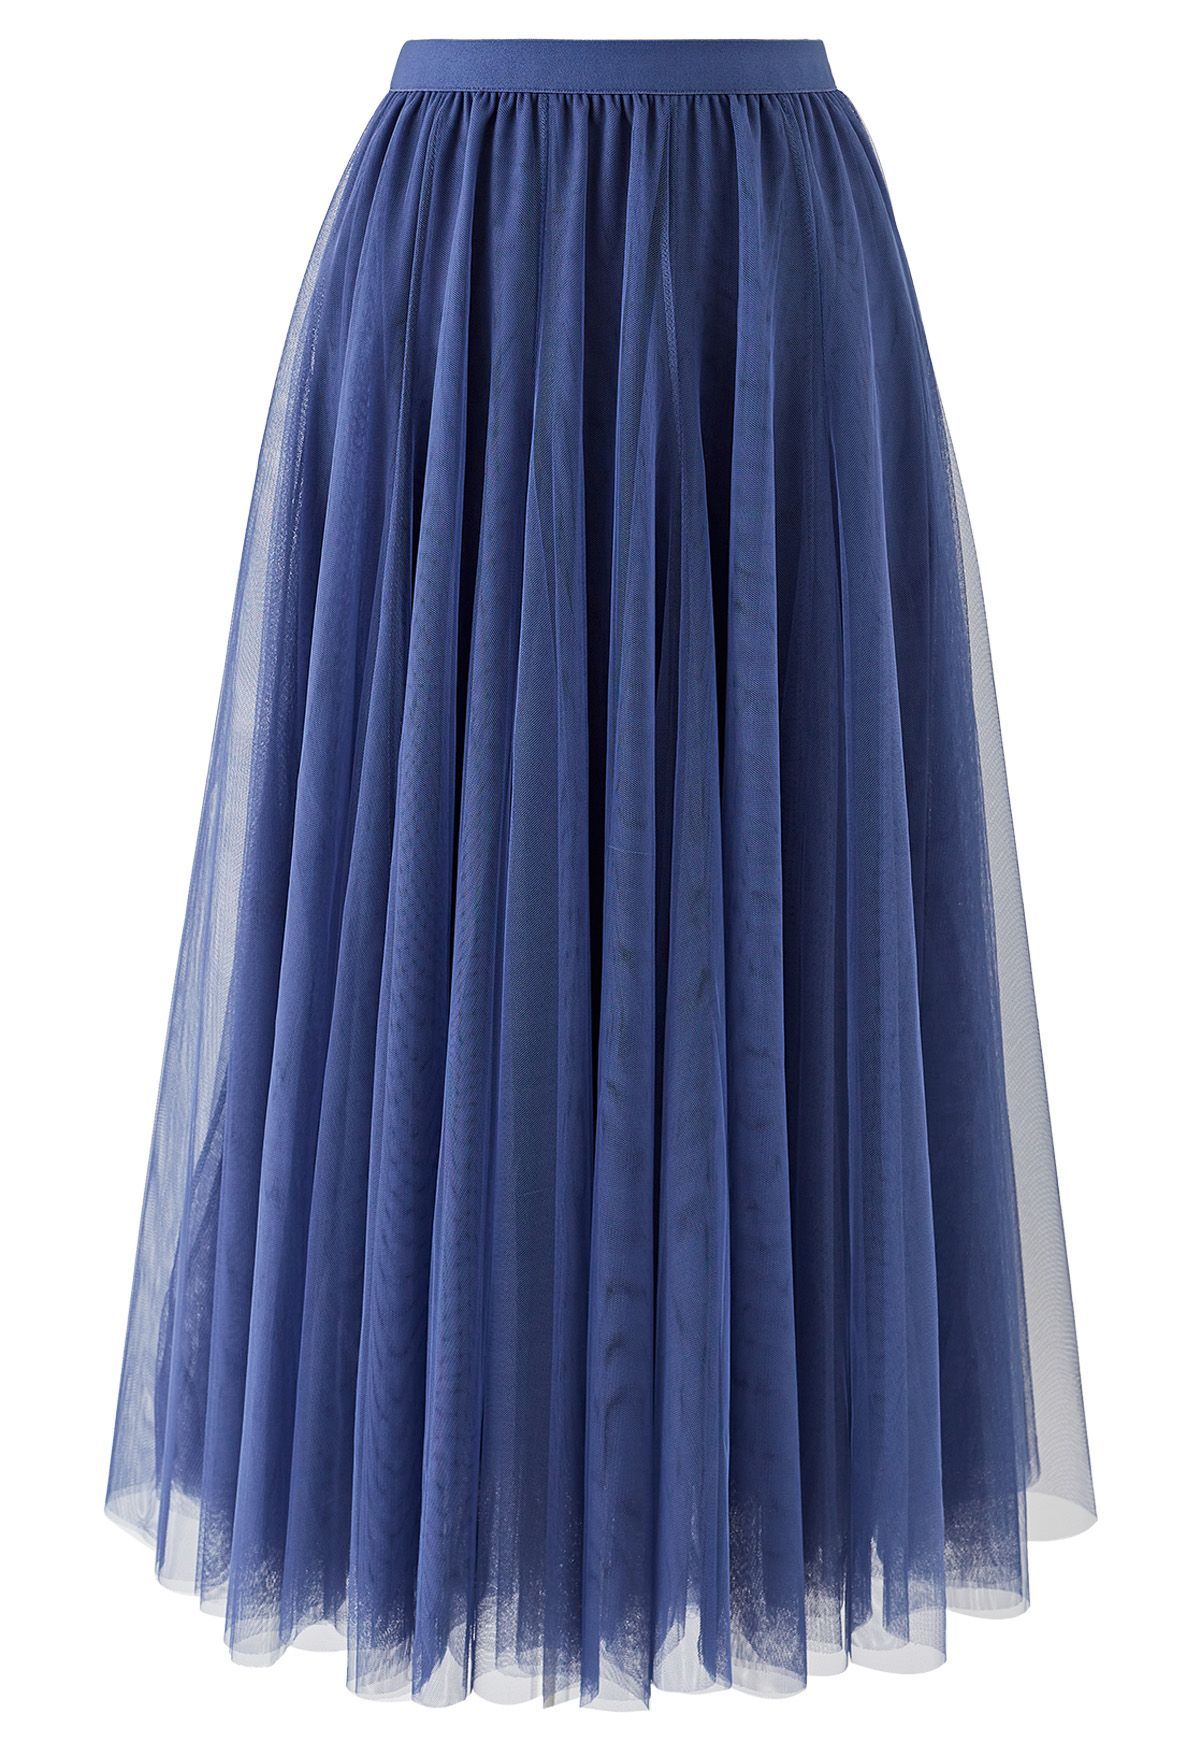 My Secret Garden Tulle Maxi Skirt in Dusty Blue | Chicwish